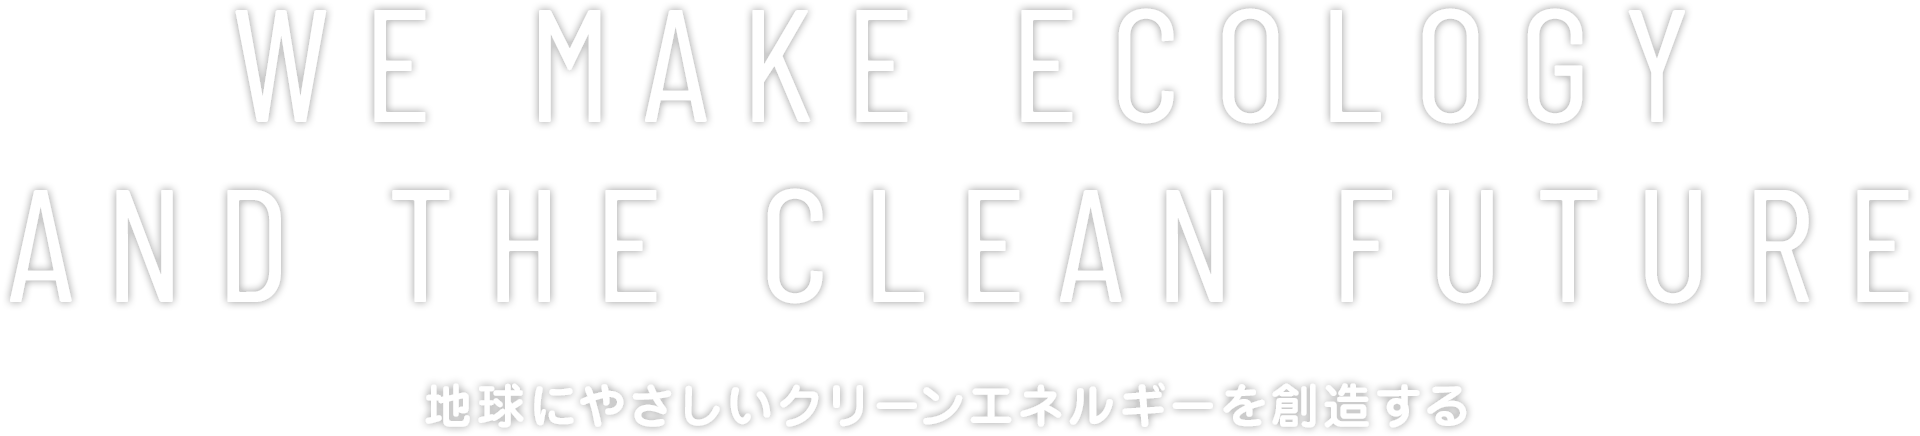 We make ecology and the clean future【地球にやさしいクリーンエネルギーを創造する】